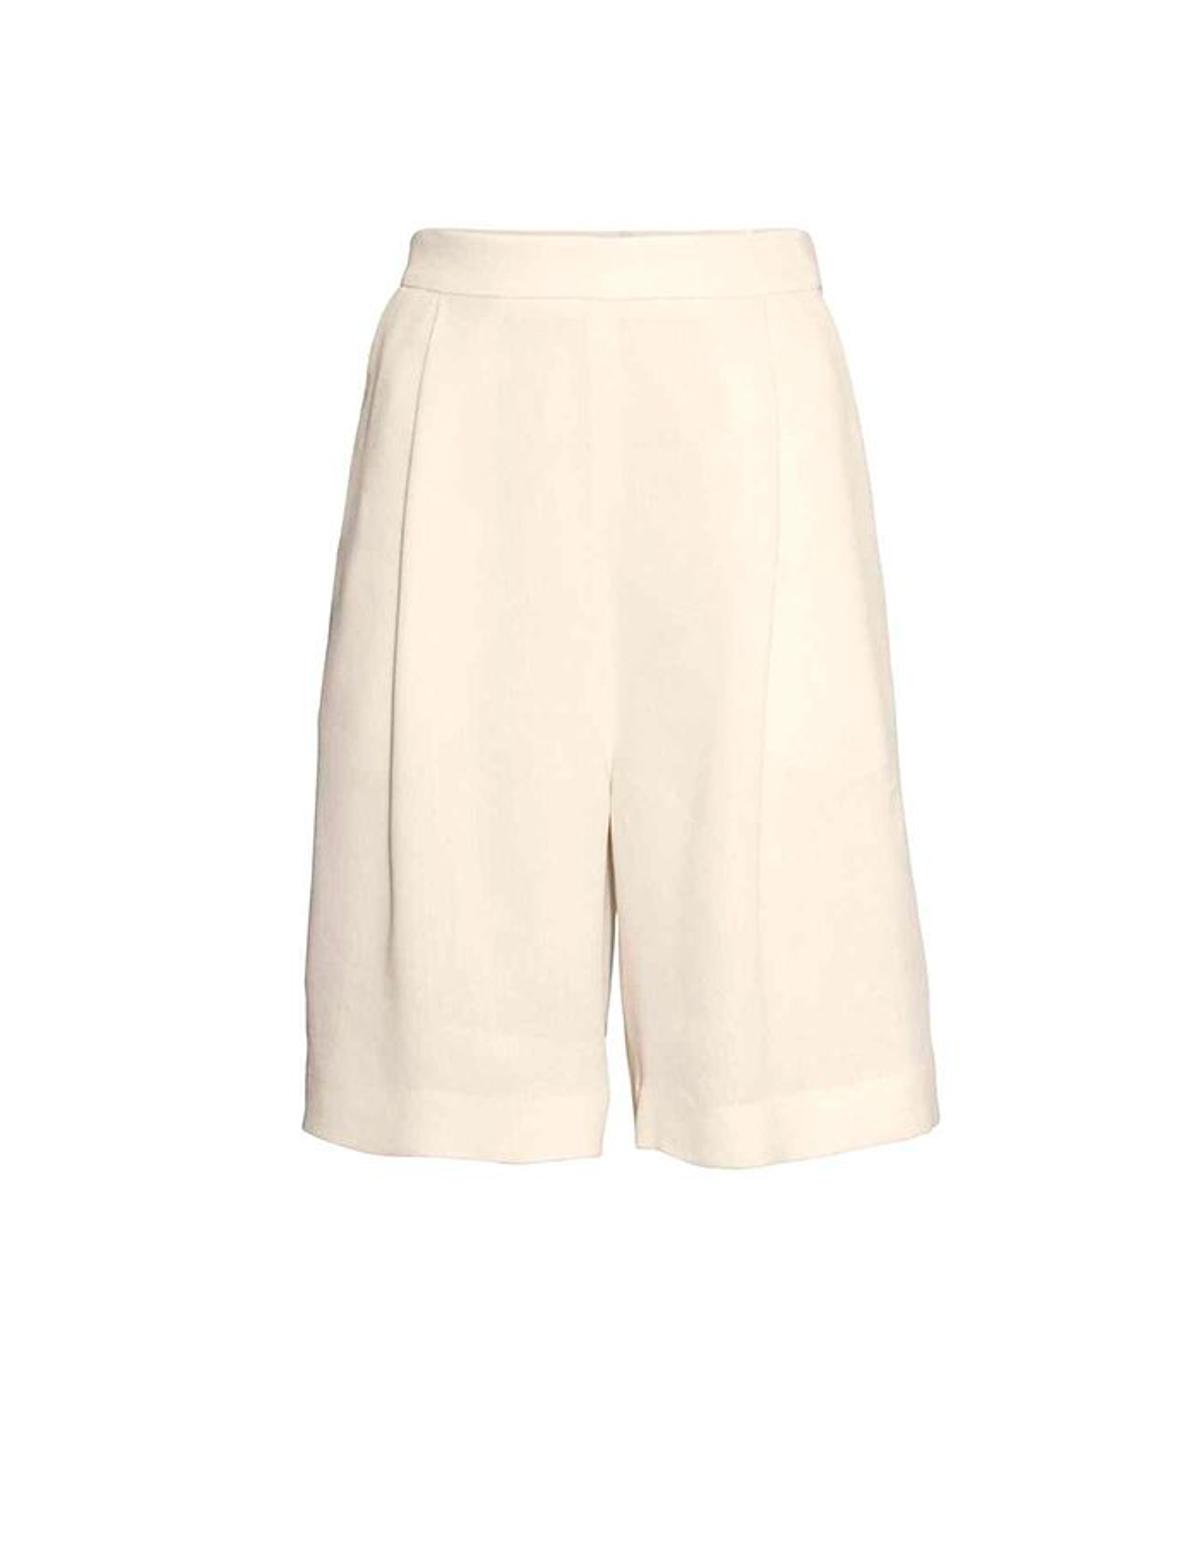 Shorts mezcla de lino en color blanco de H&amp;M (39,99€)